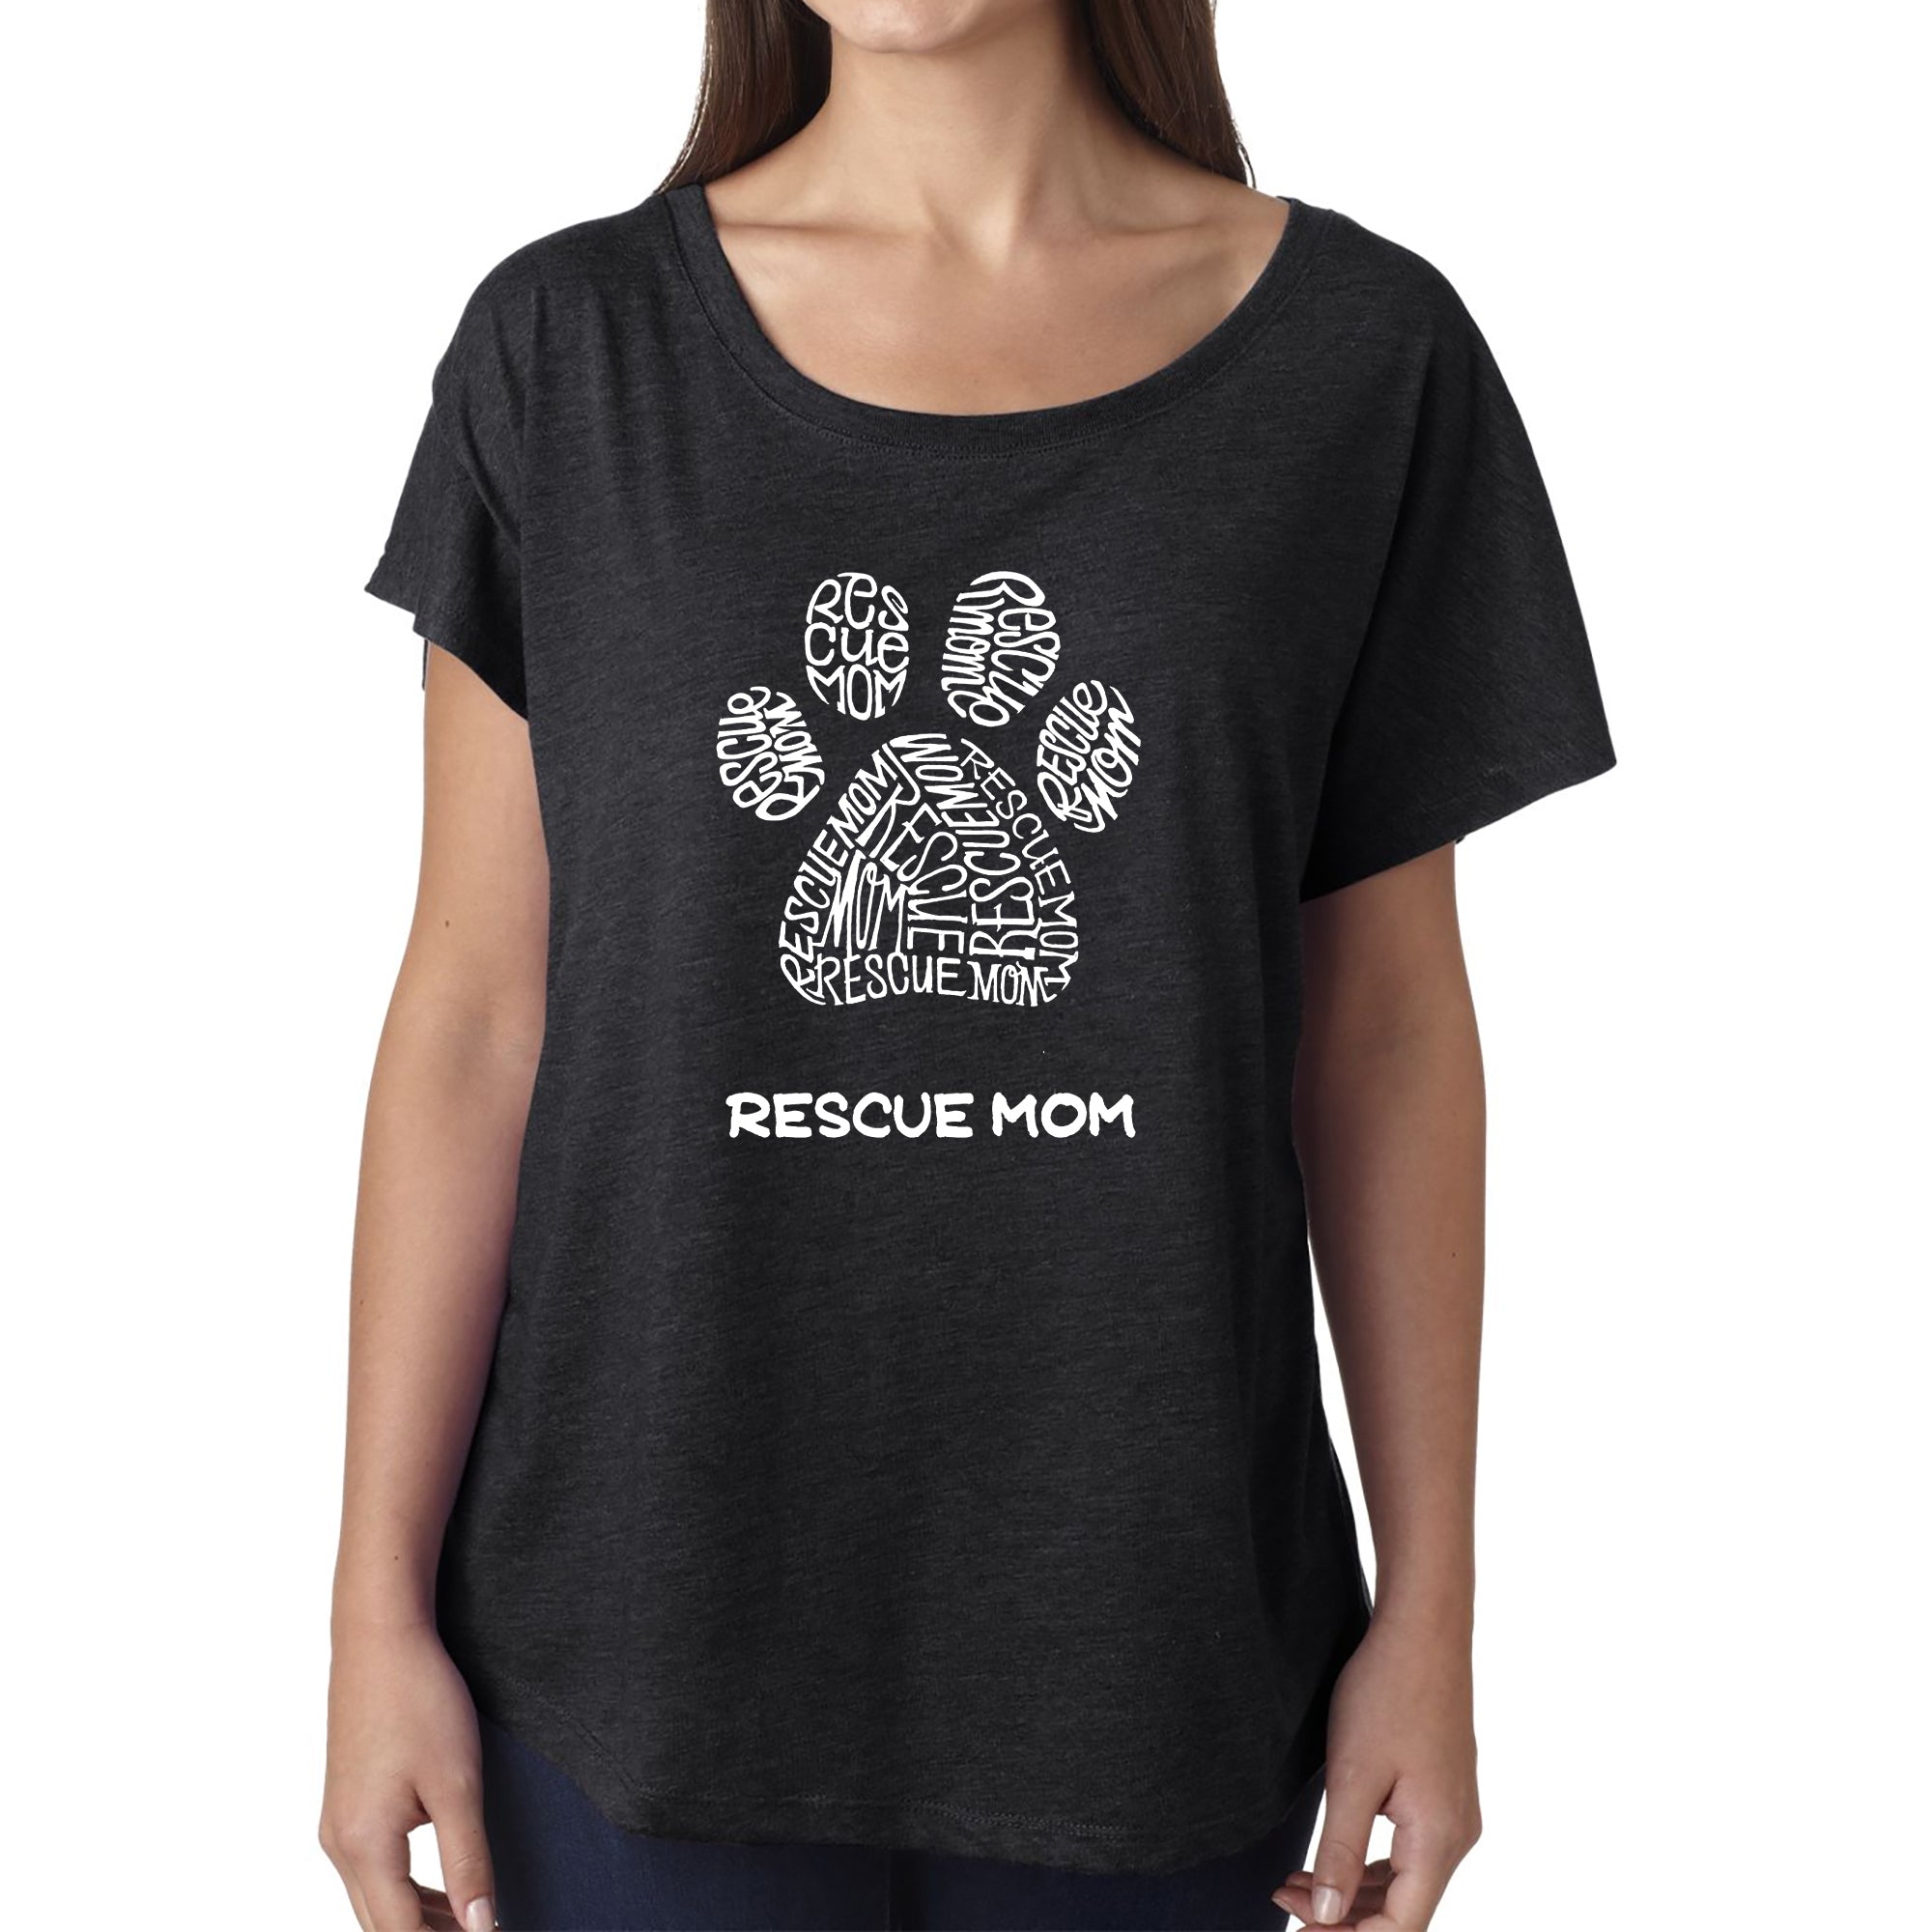 Rescue Mom - Women's Loose Fit Dolman Cut Word Art Shirt - Black - XX-Large